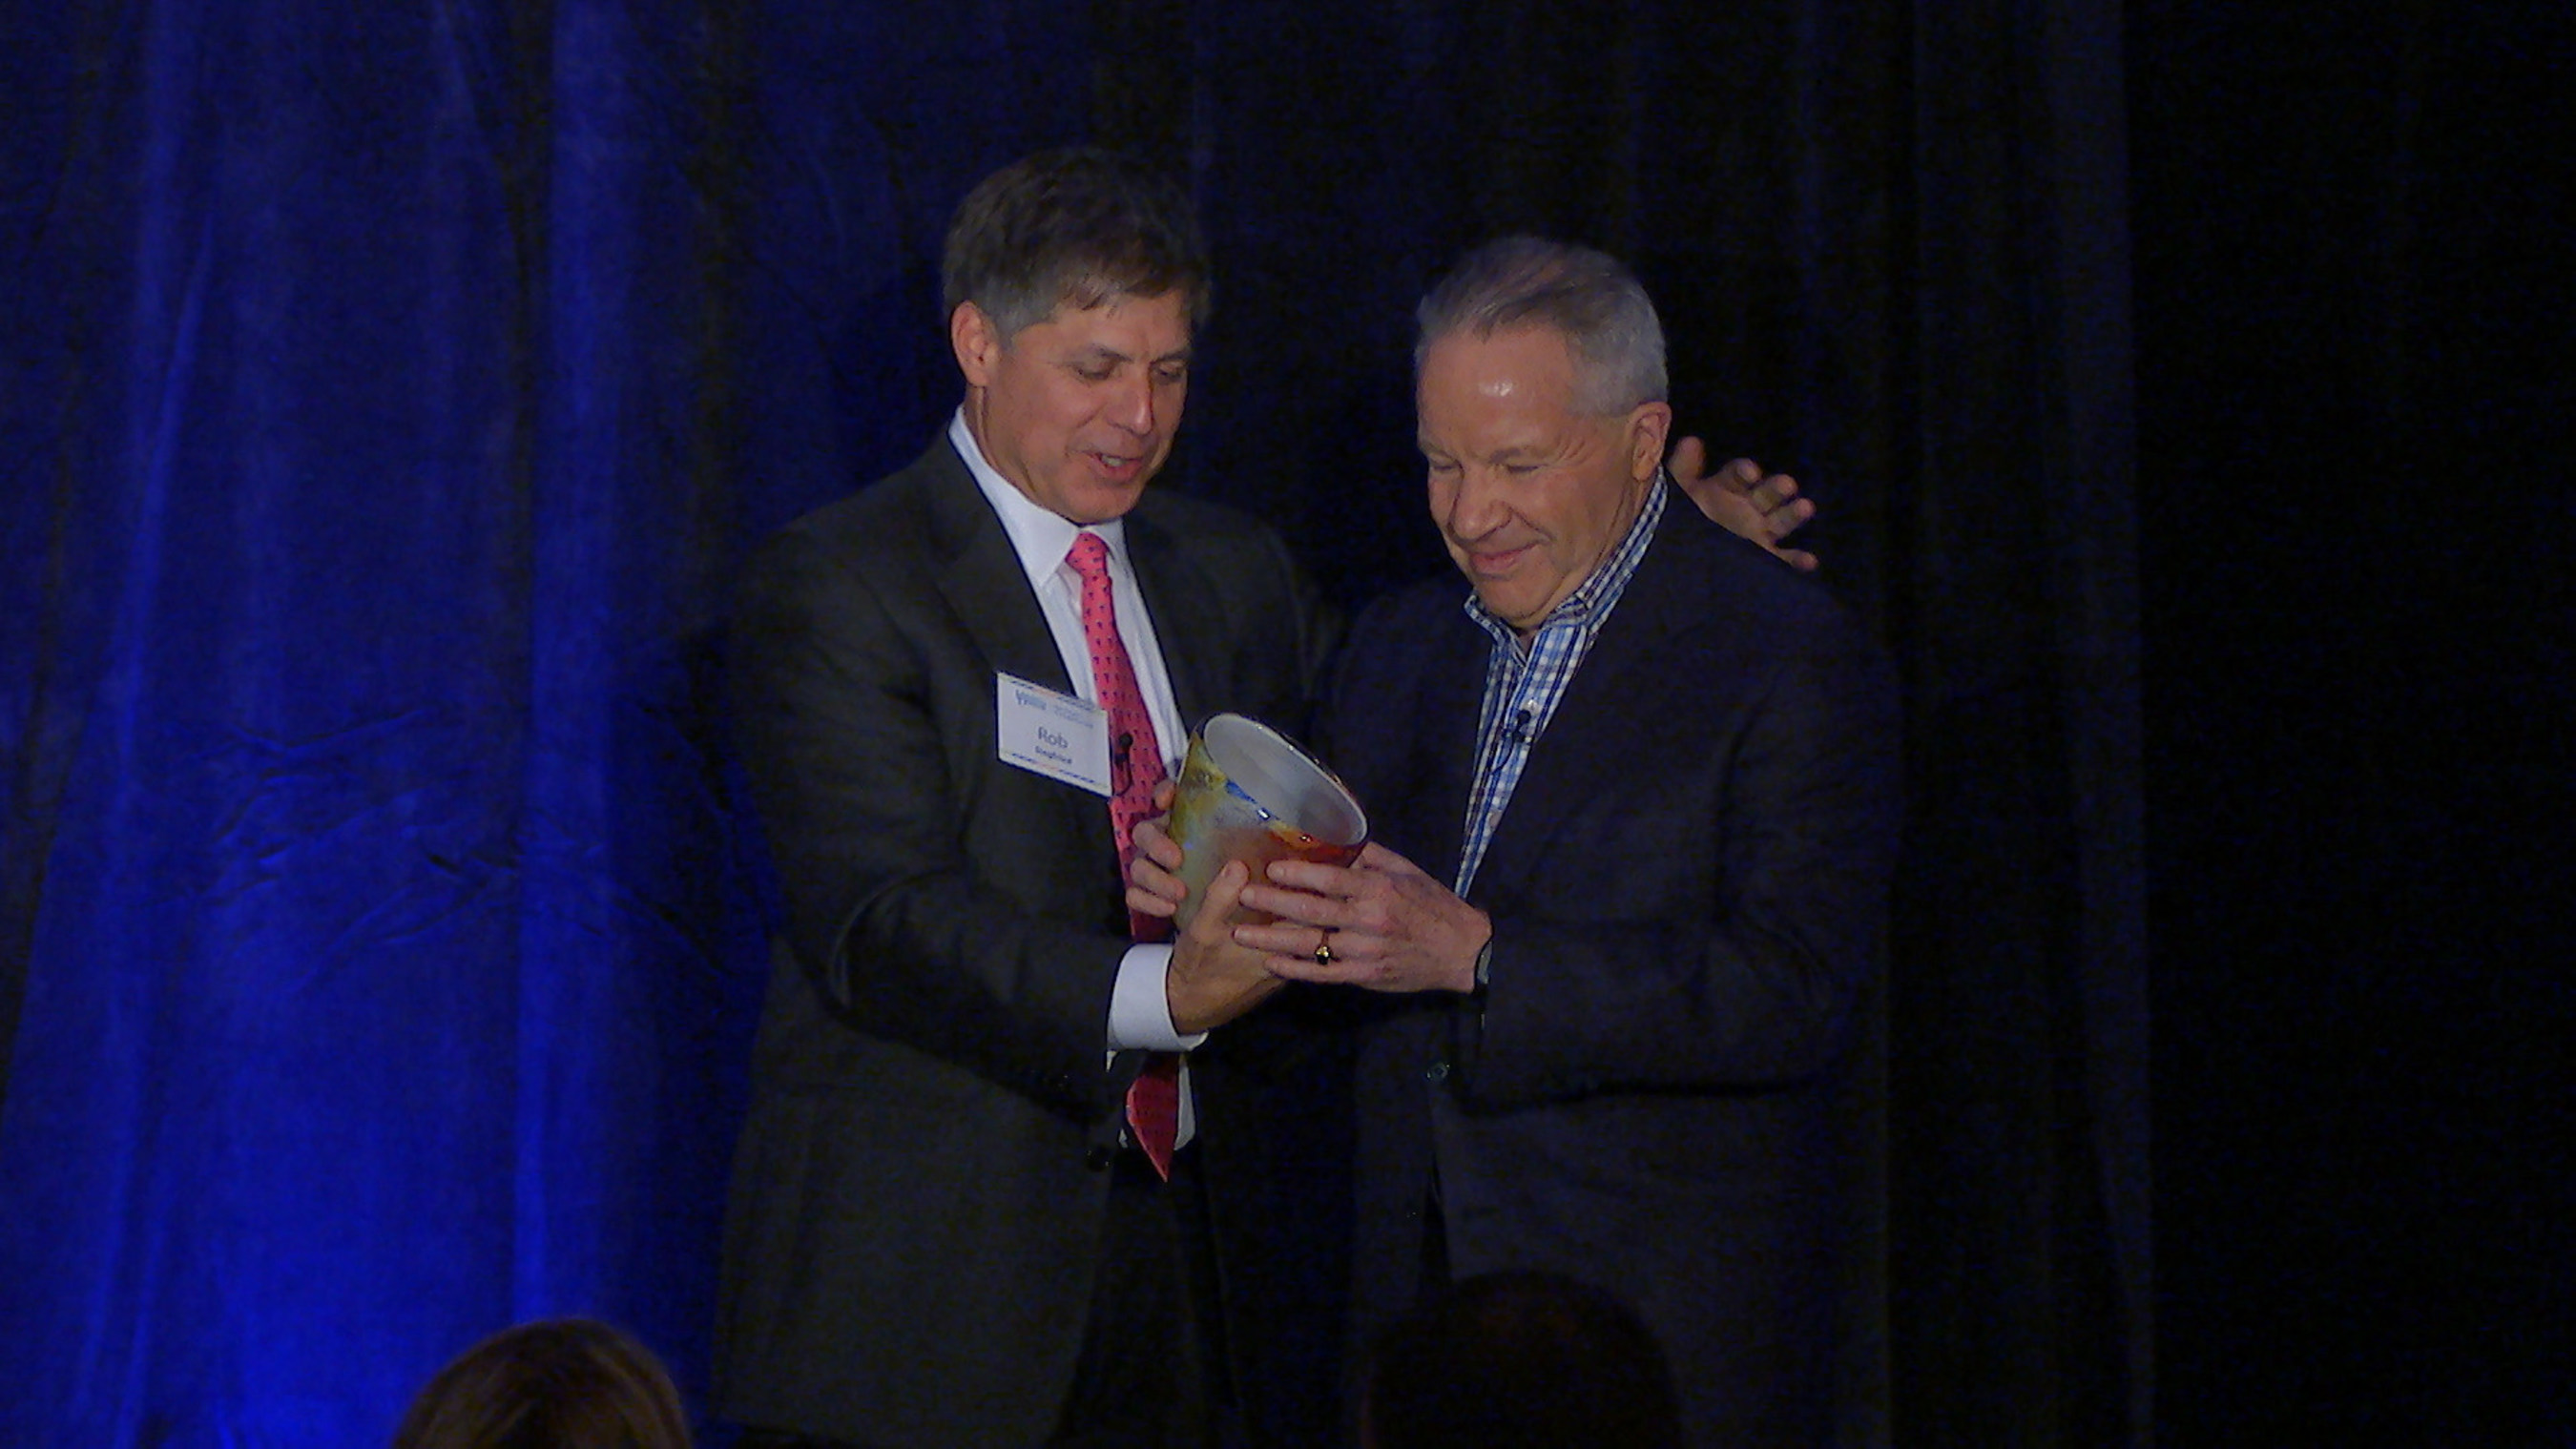 Rob Siegfried presents 1st Siegfried Award for Entrepreneurial Leadership to Dan Sullivan, CEO of Strategic Coach Inc.